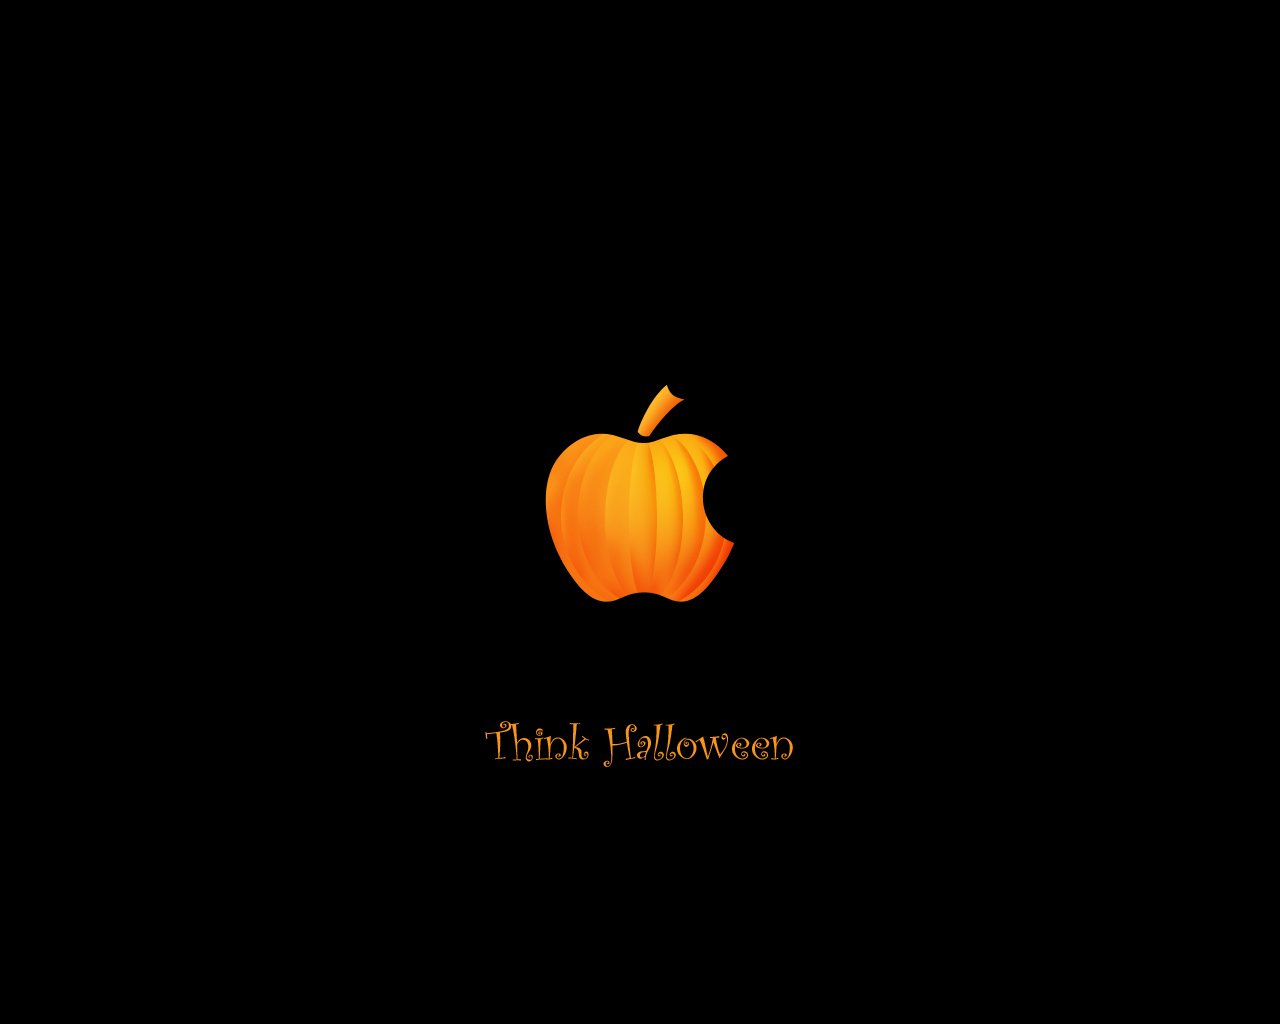 Think Halloween